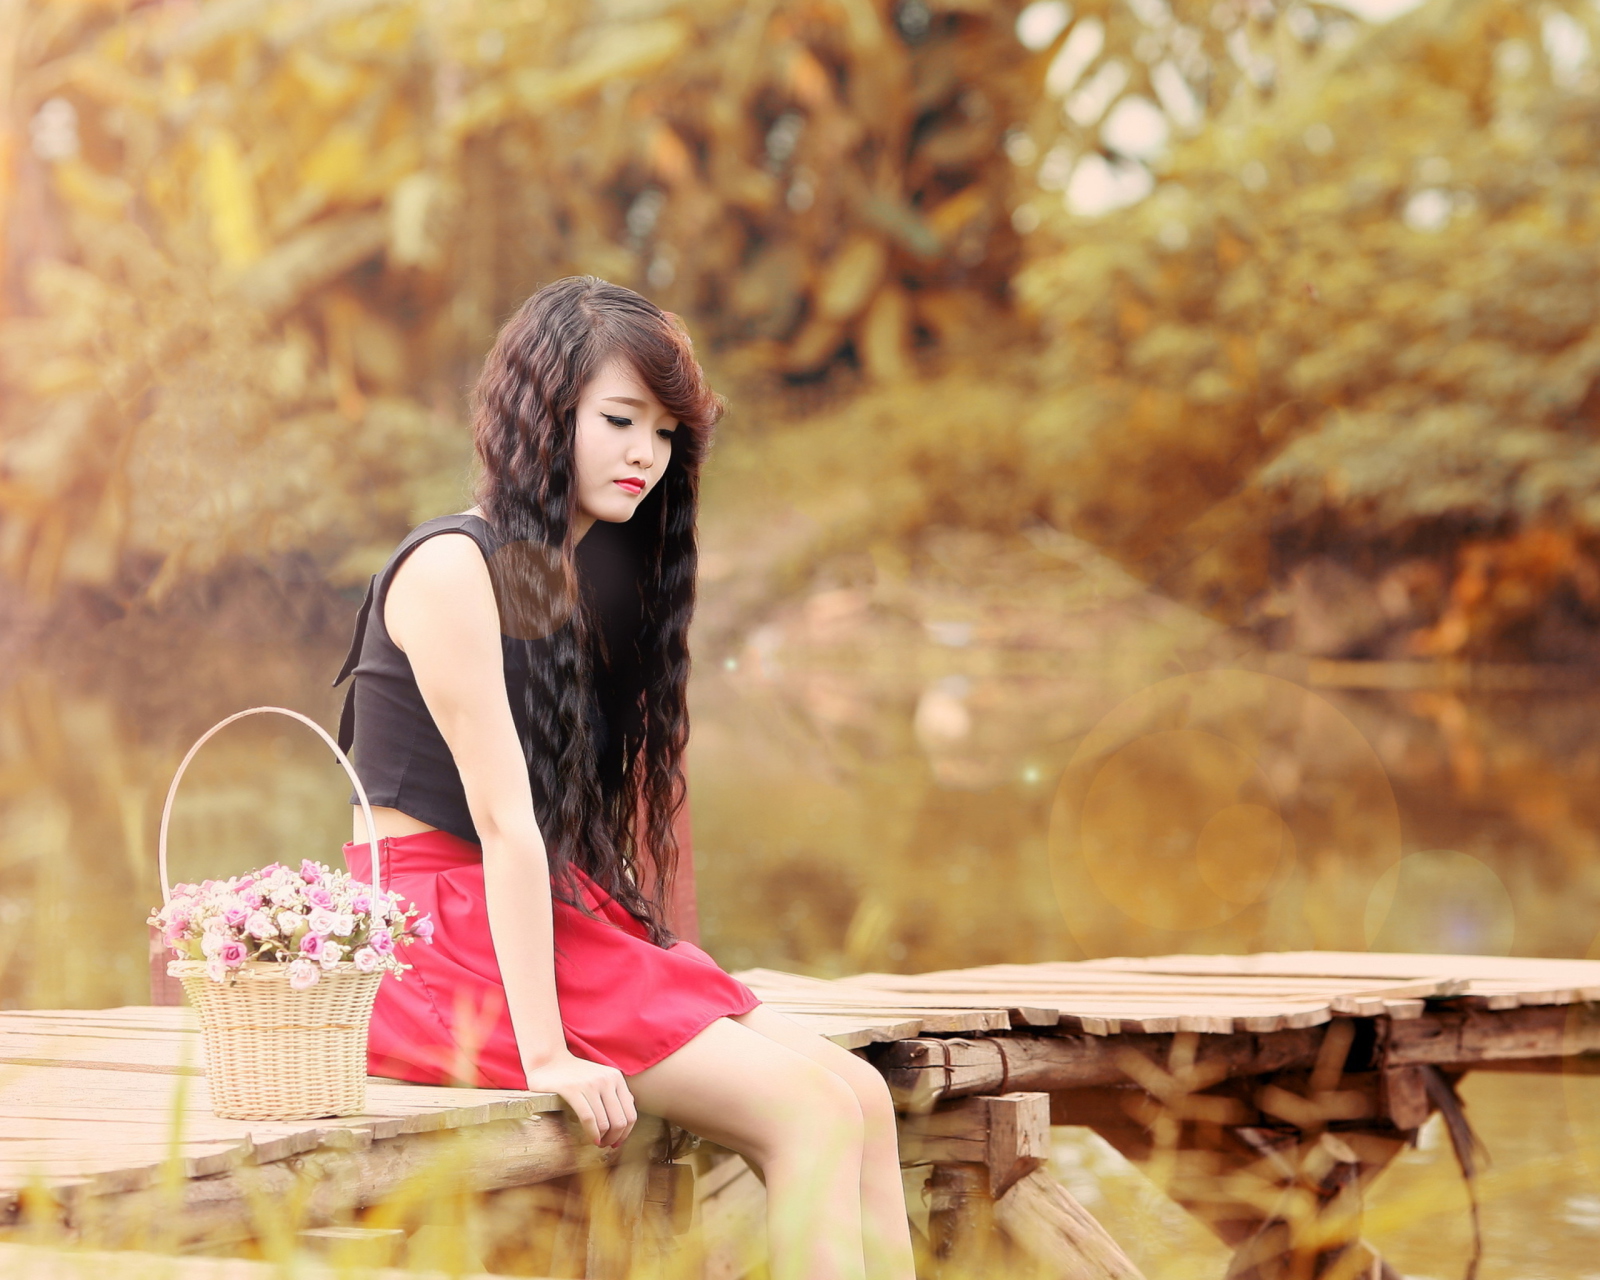 Sad Asian Girl With Flower Basket wallpaper 1600x1280